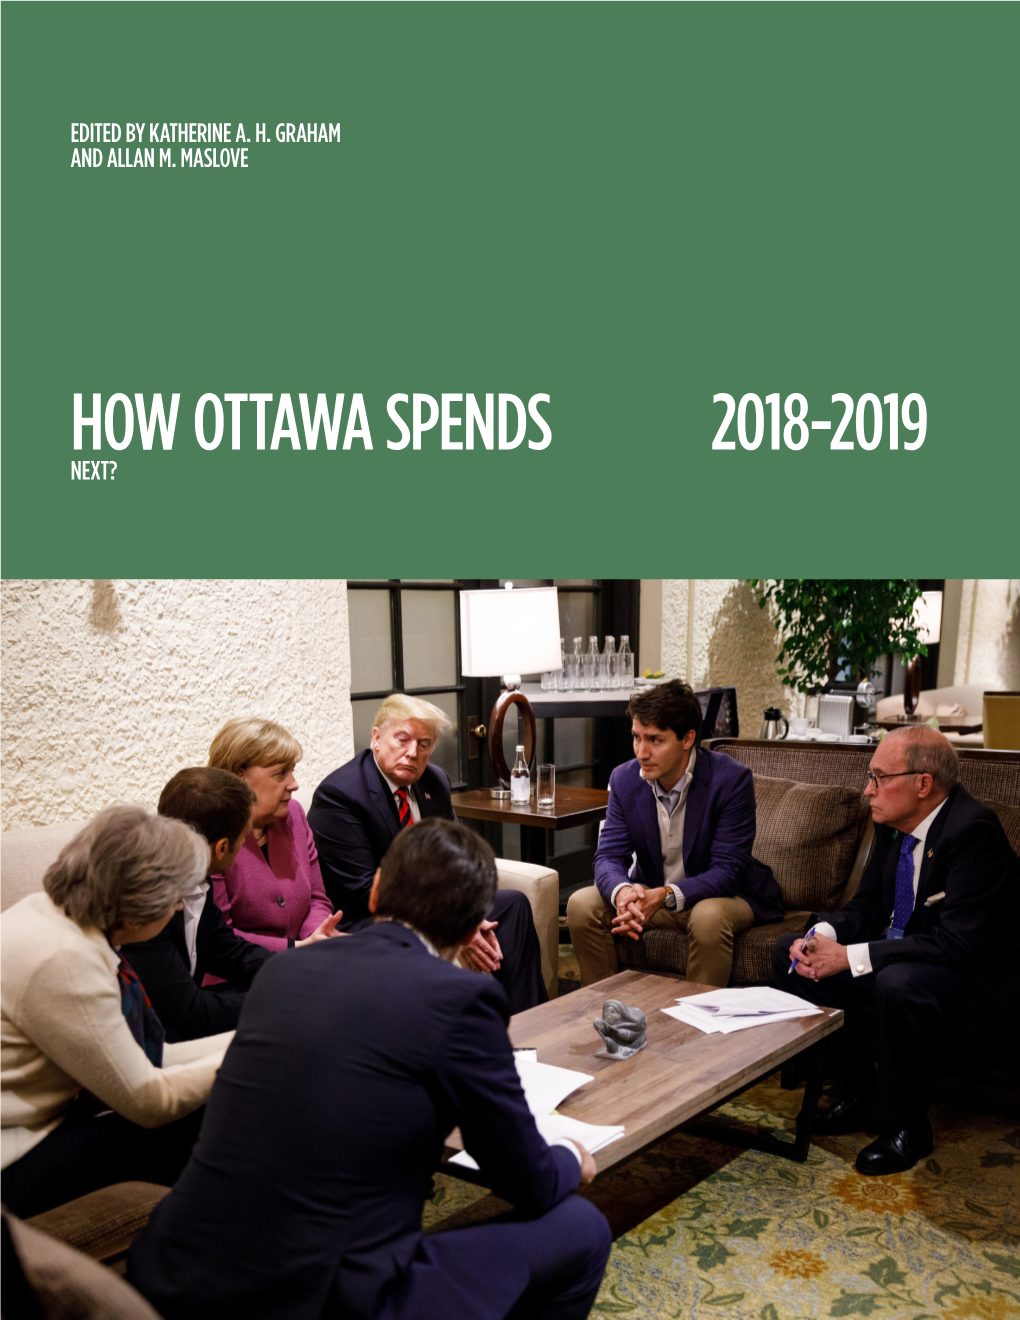 HOW OTTAWA SPENDS 2018-2019 NEXT? 1 How Ottawa Spends